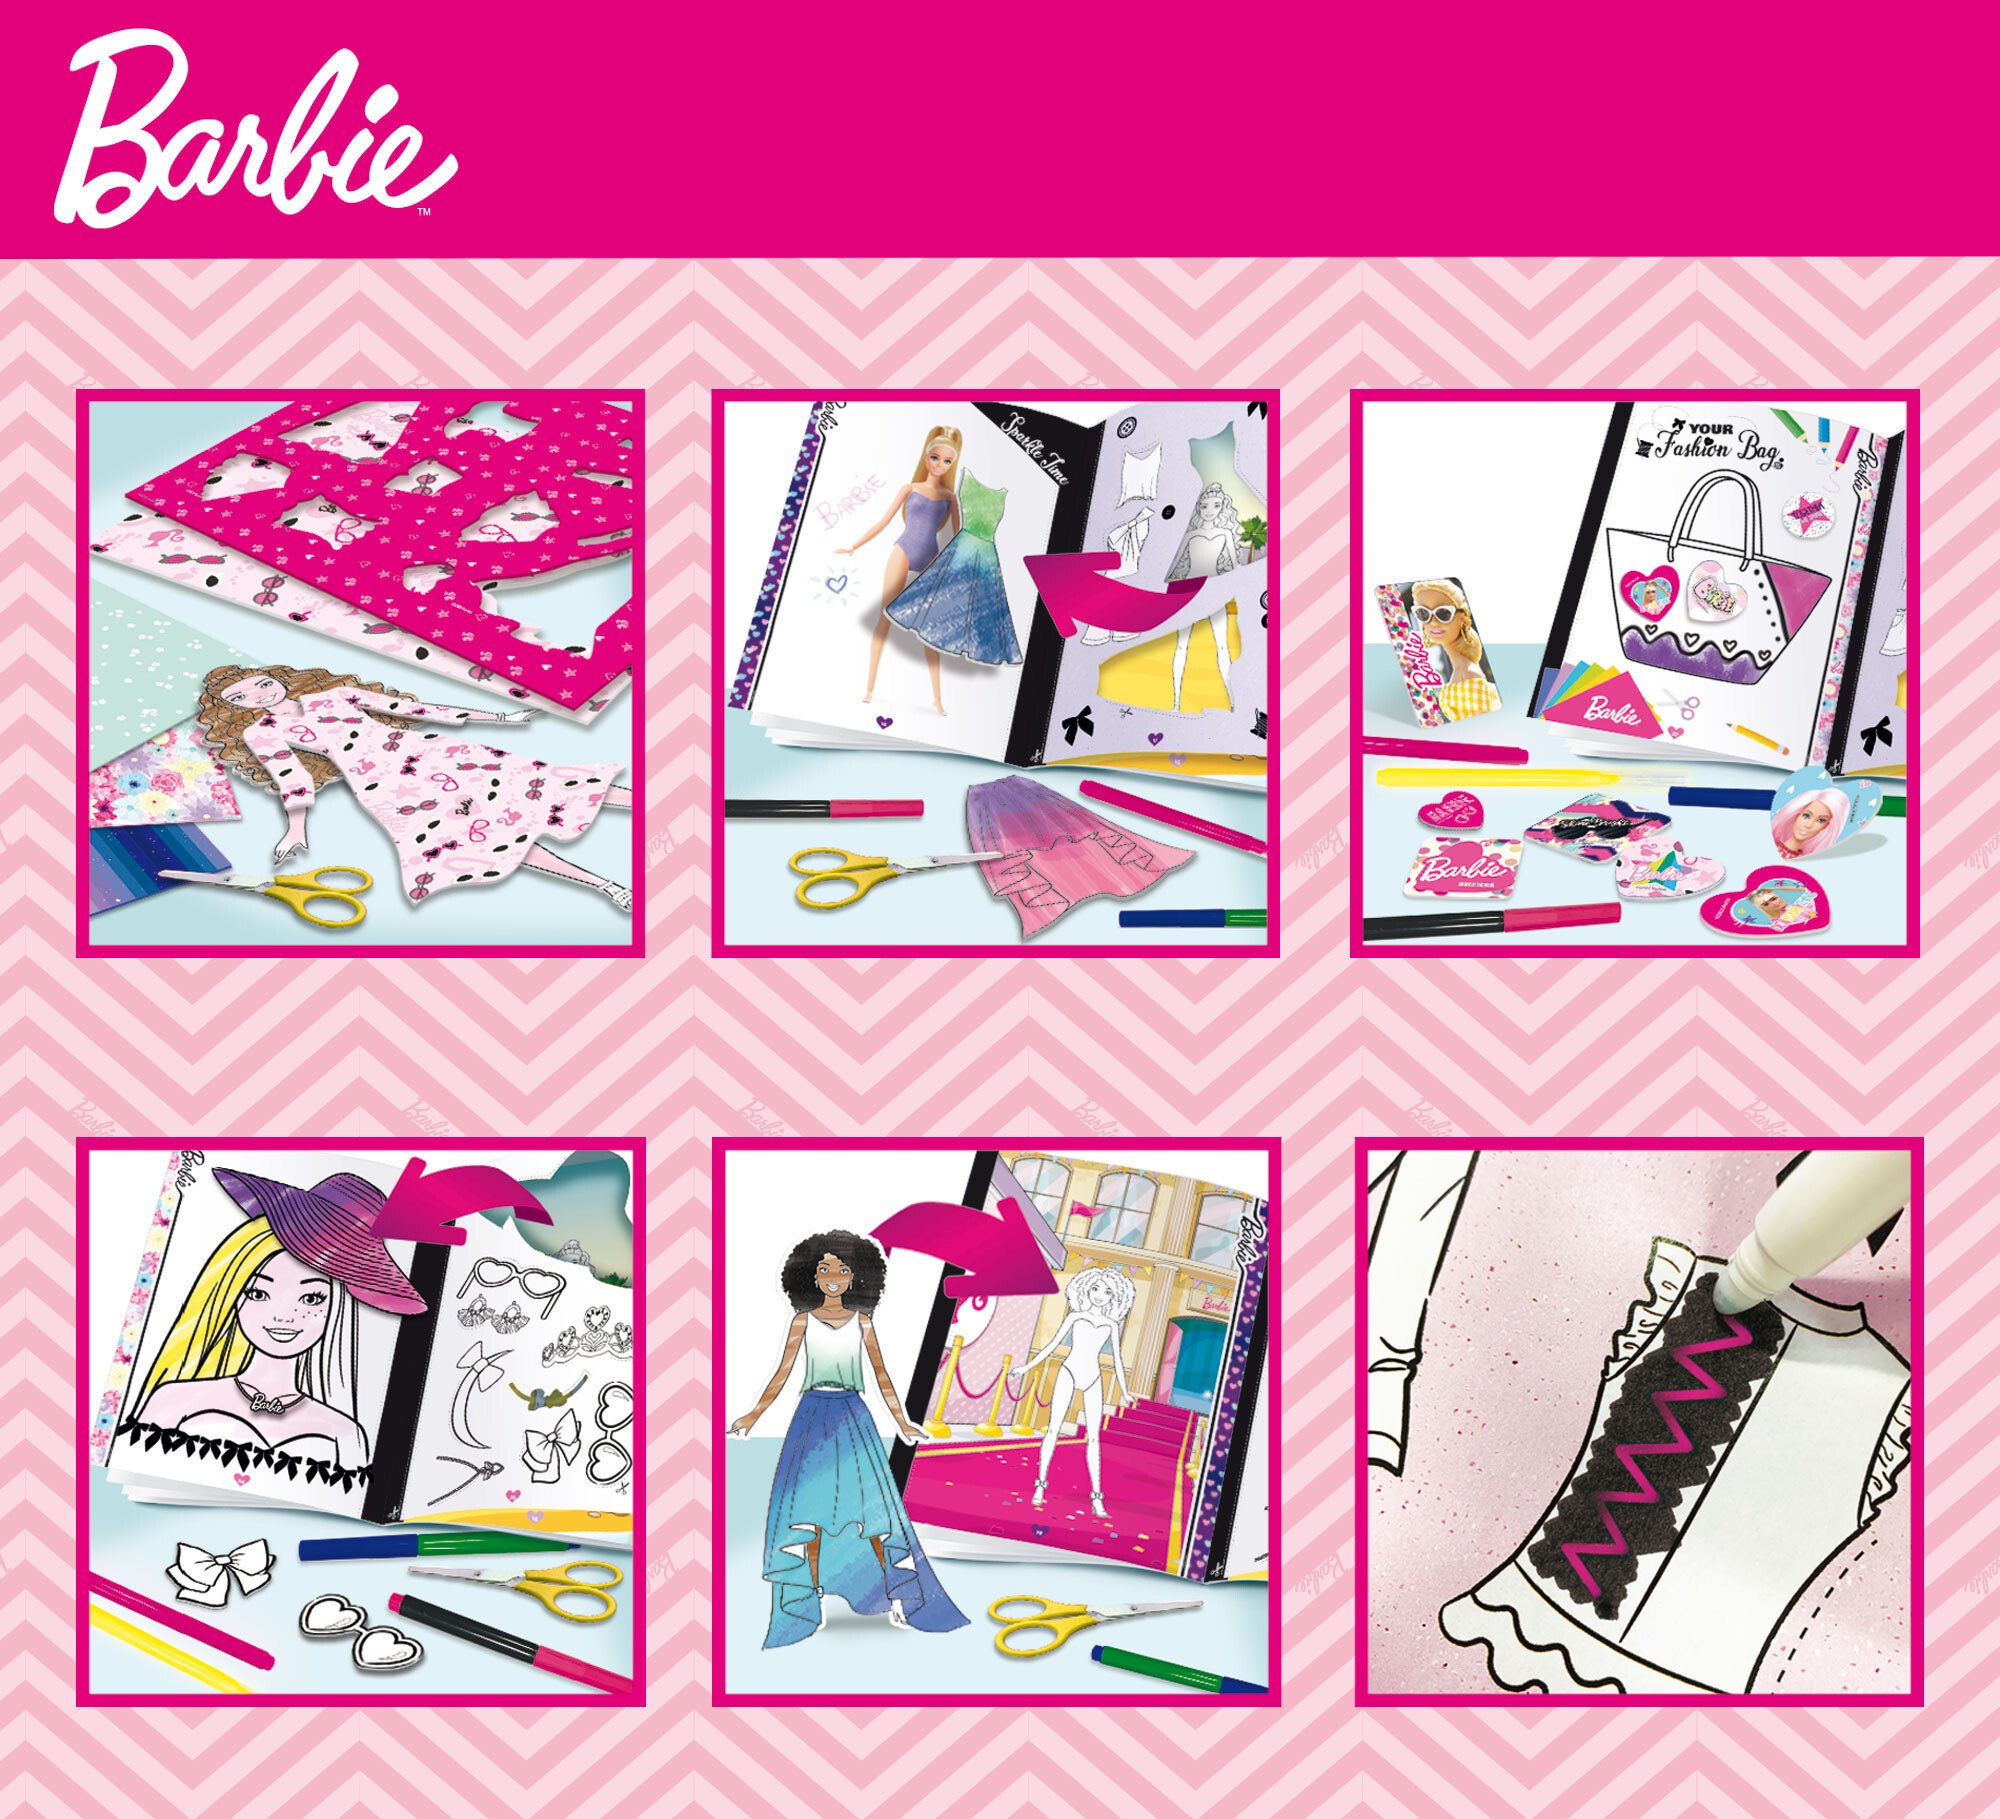 Barbie fashion school (magic pens) - LISCIANI, Barbie